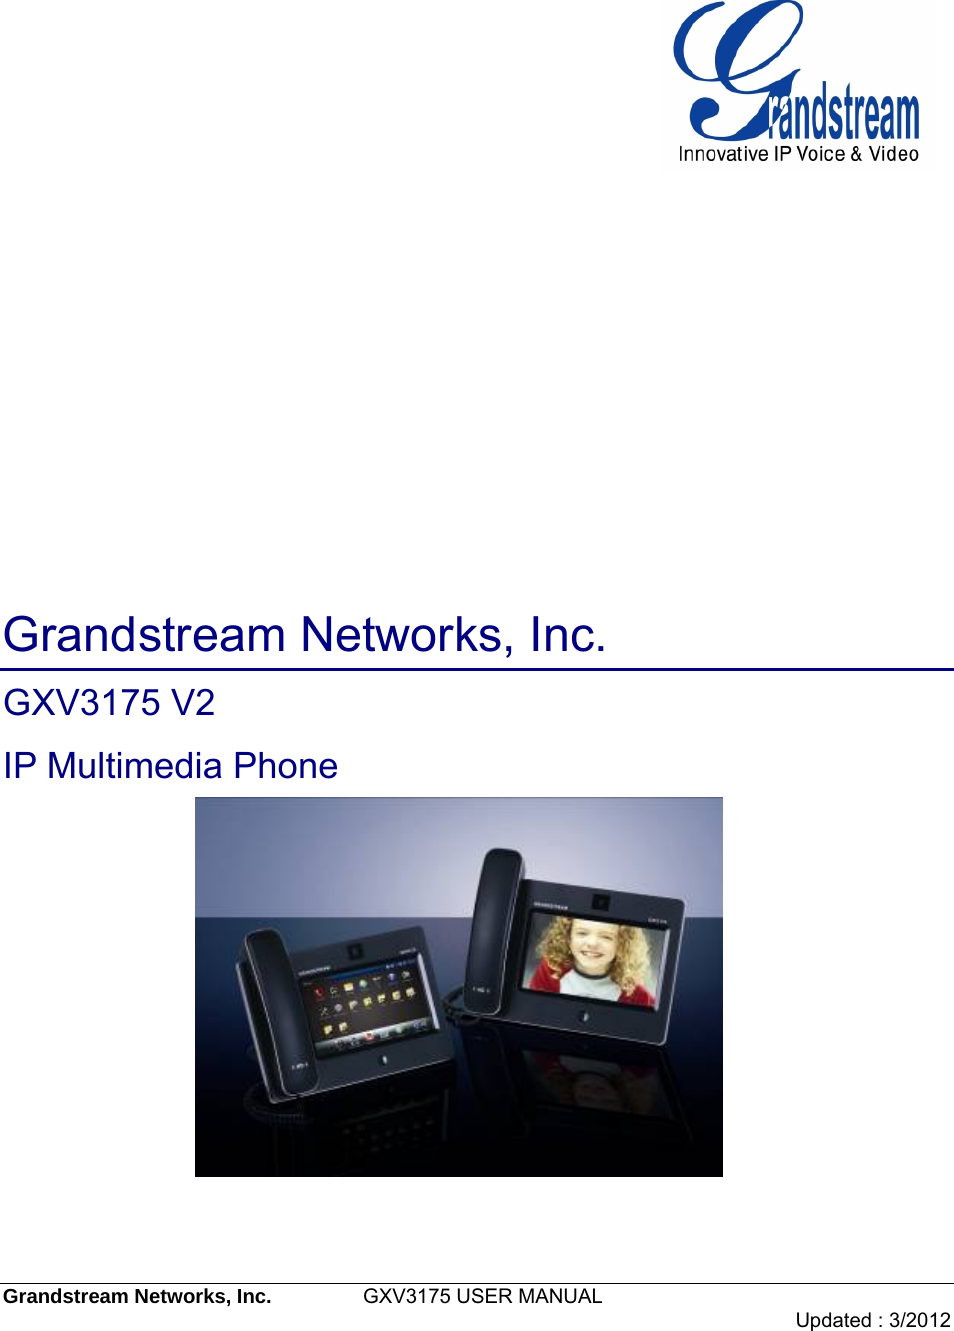  Grandstream Networks, Inc.         GXV3175 USER MANUAL                                    Updated : 3/2012                 Grandstream Networks, Inc. GXV3175 V2 IP Multimedia Phone 